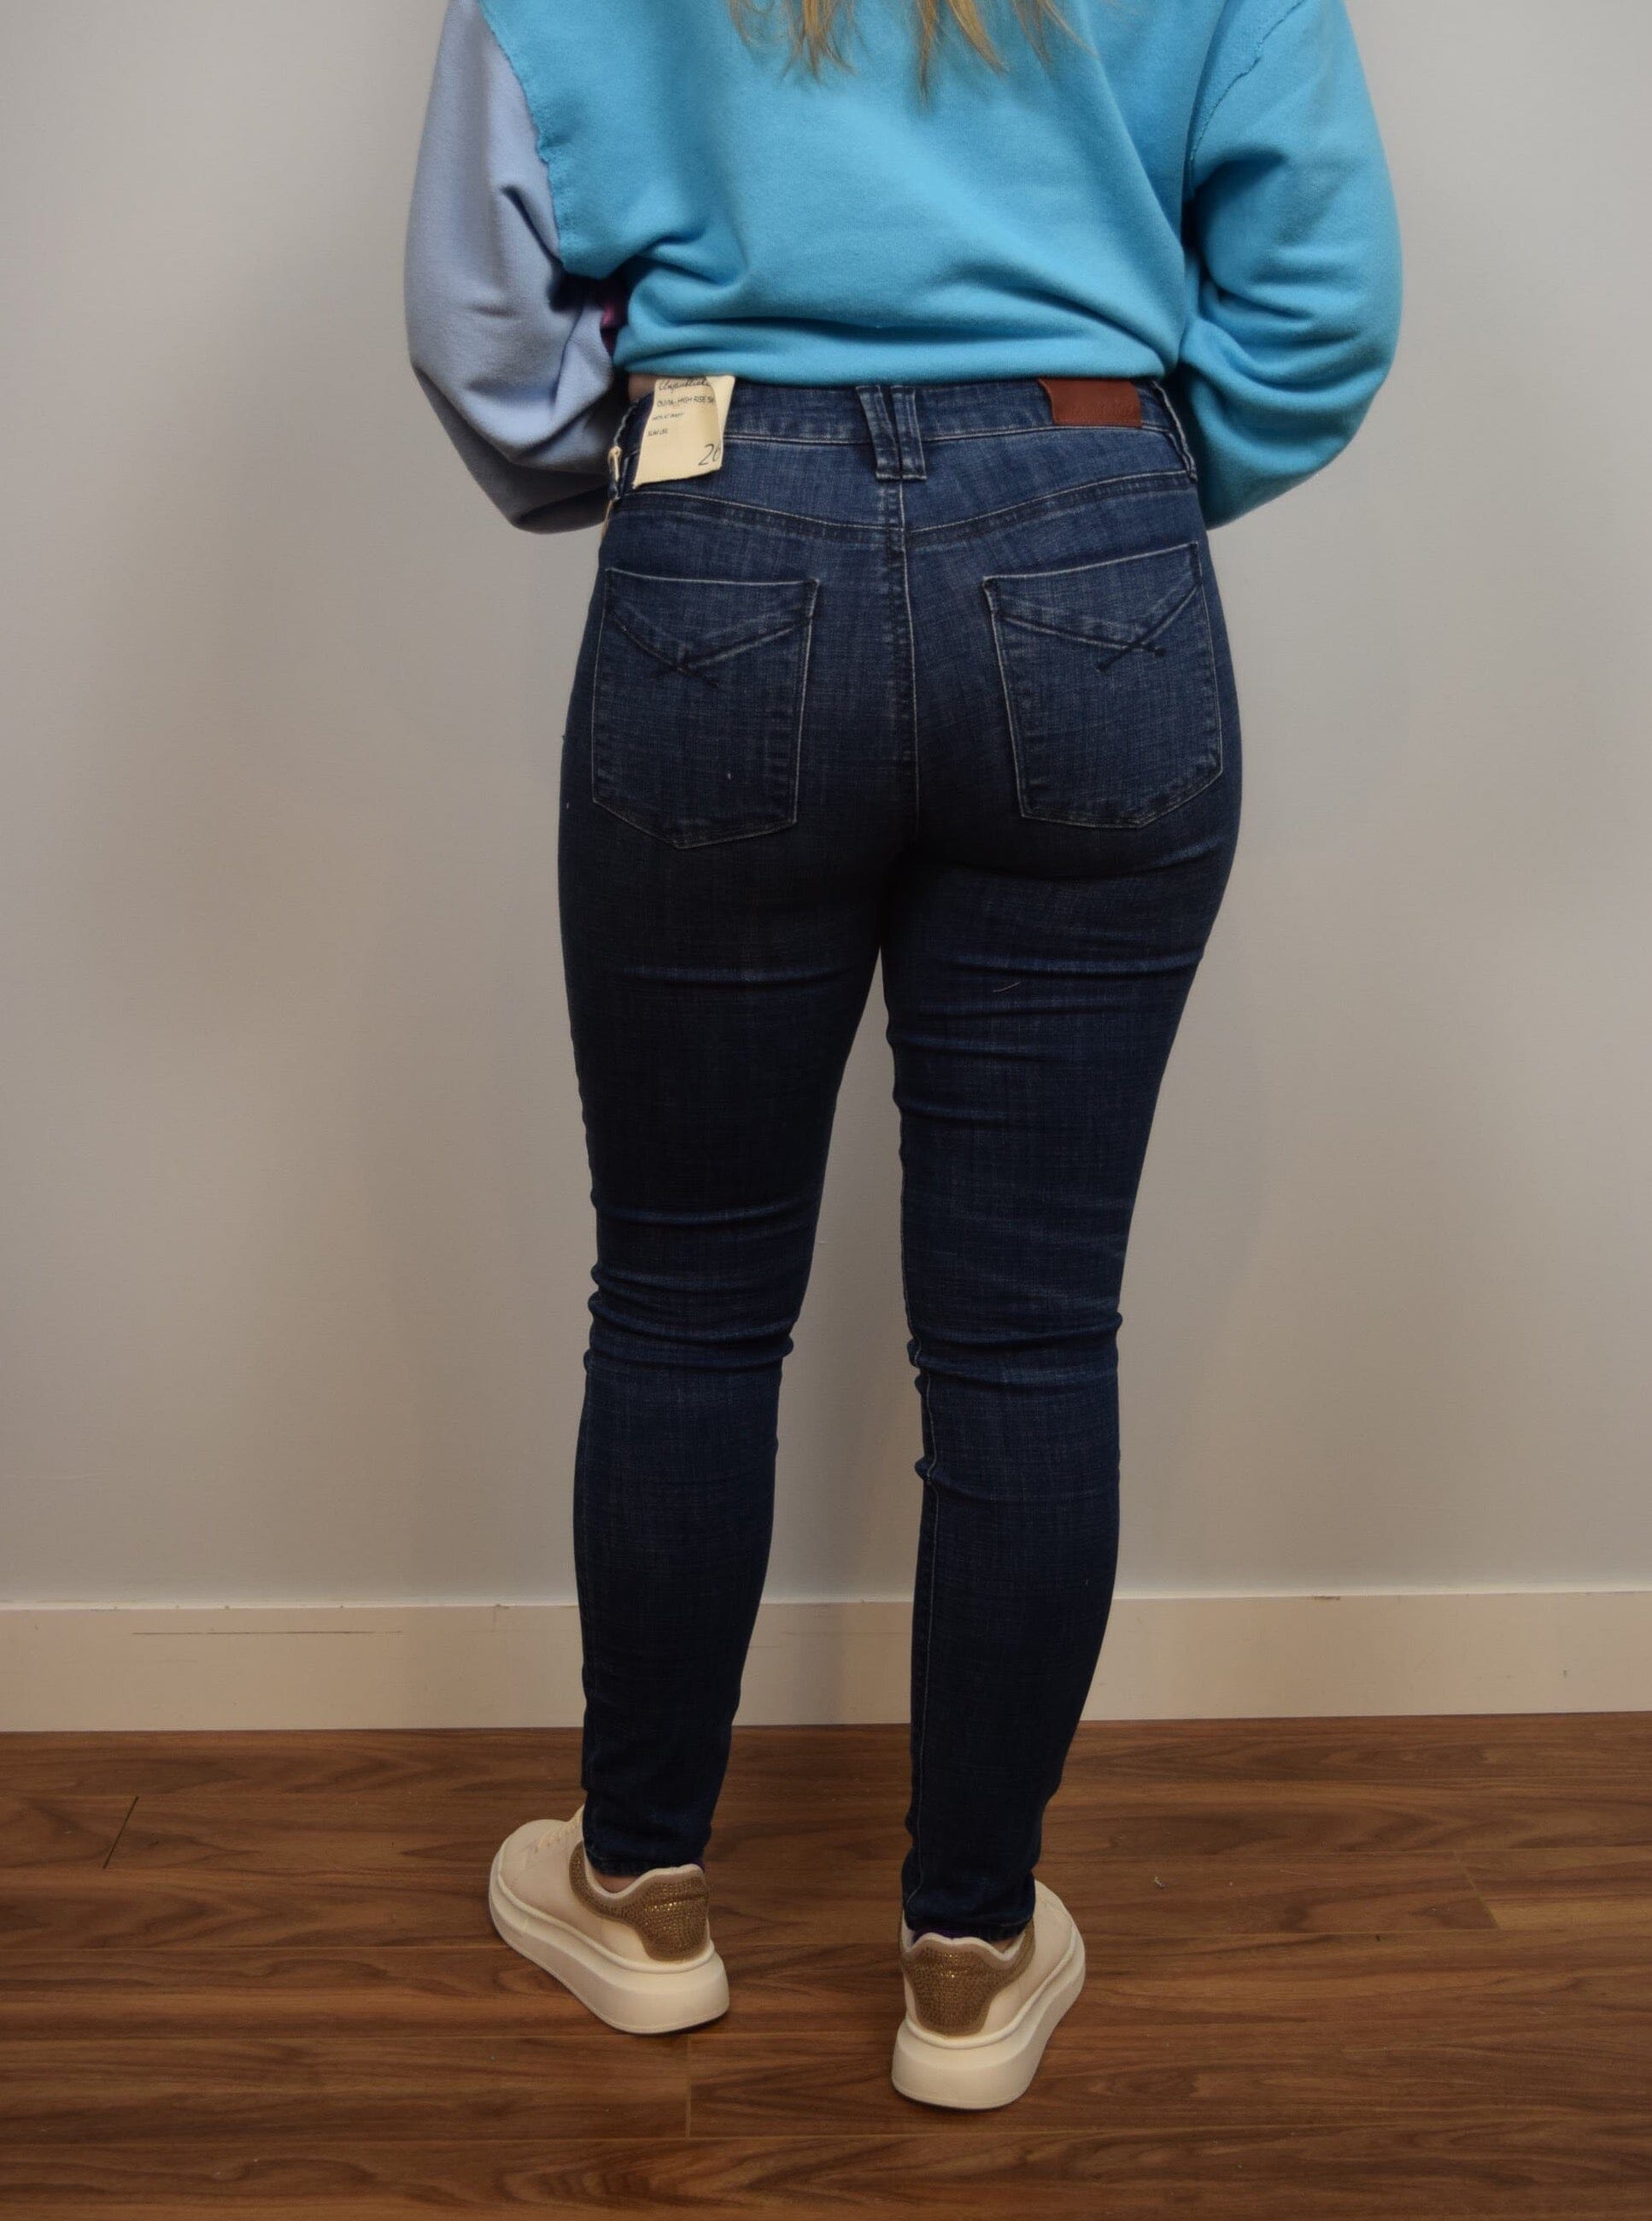 Olivia Chestnut Brown Vegan Leather High Waisted Skinny Jeans